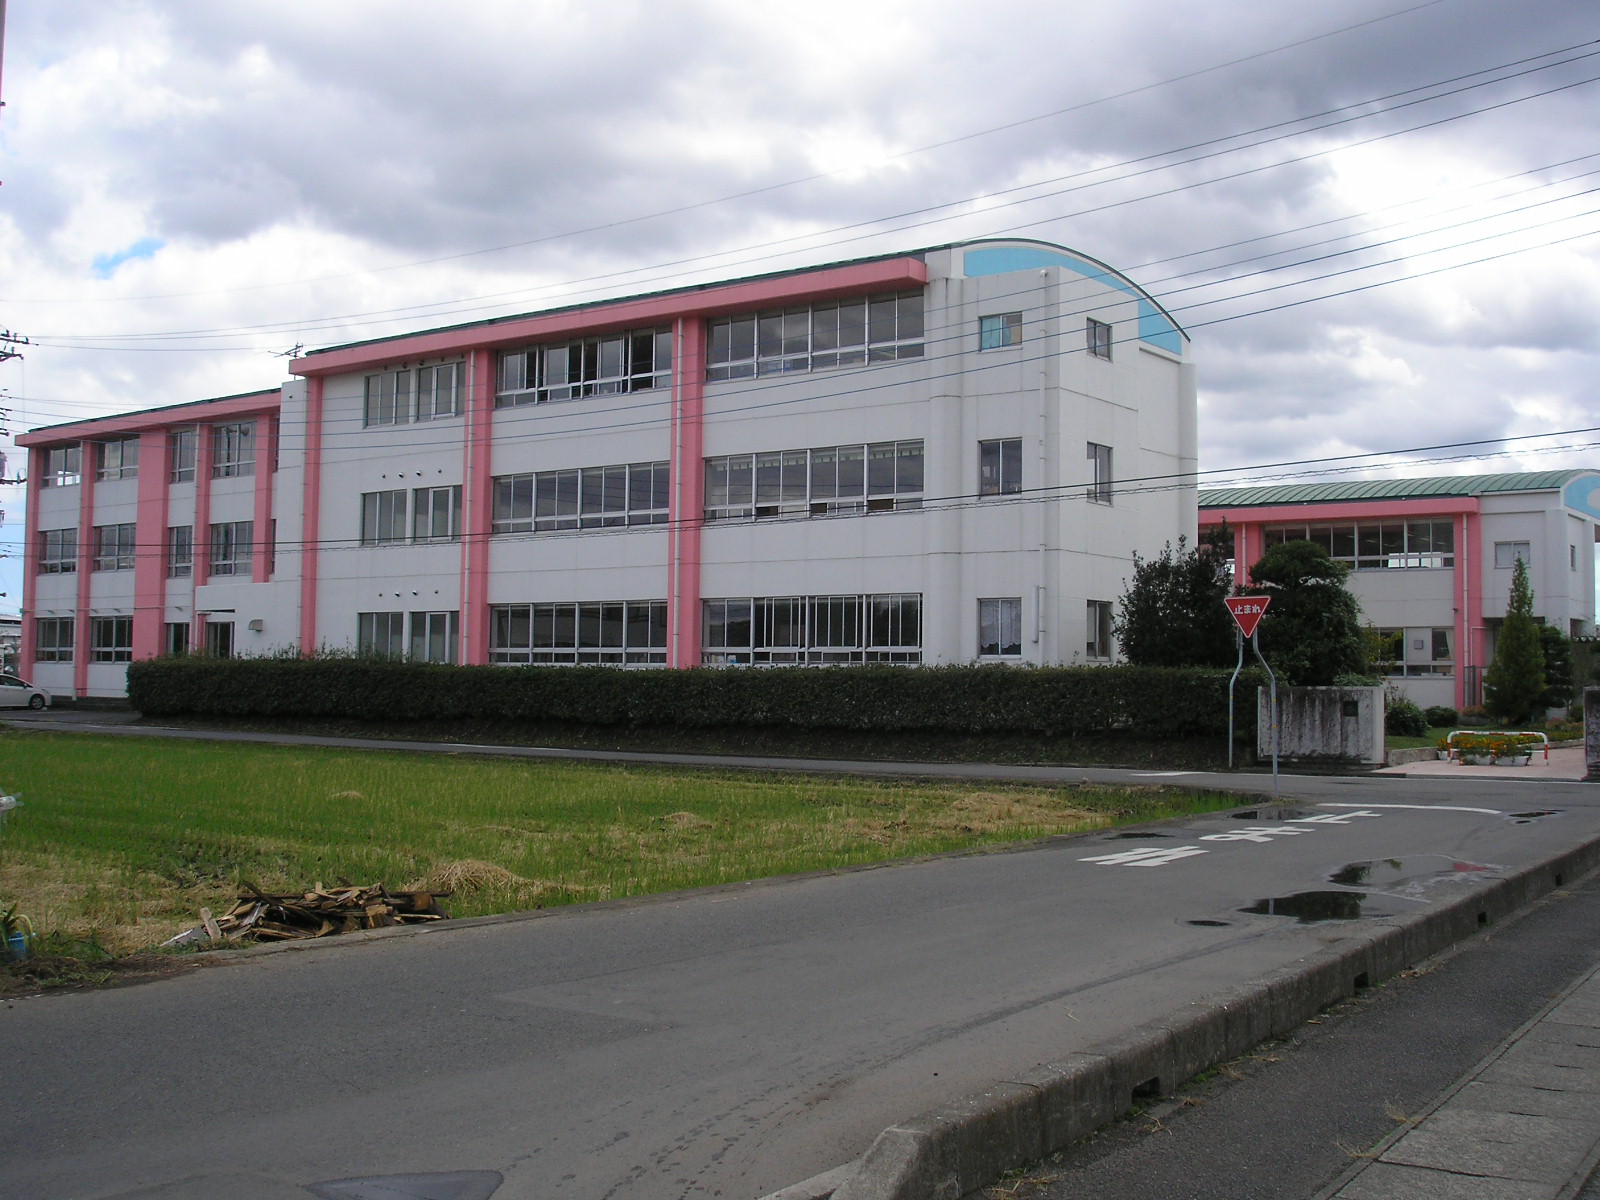 Primary school. 762m until Hitachiōmiya stand Ueno elementary school (elementary school)